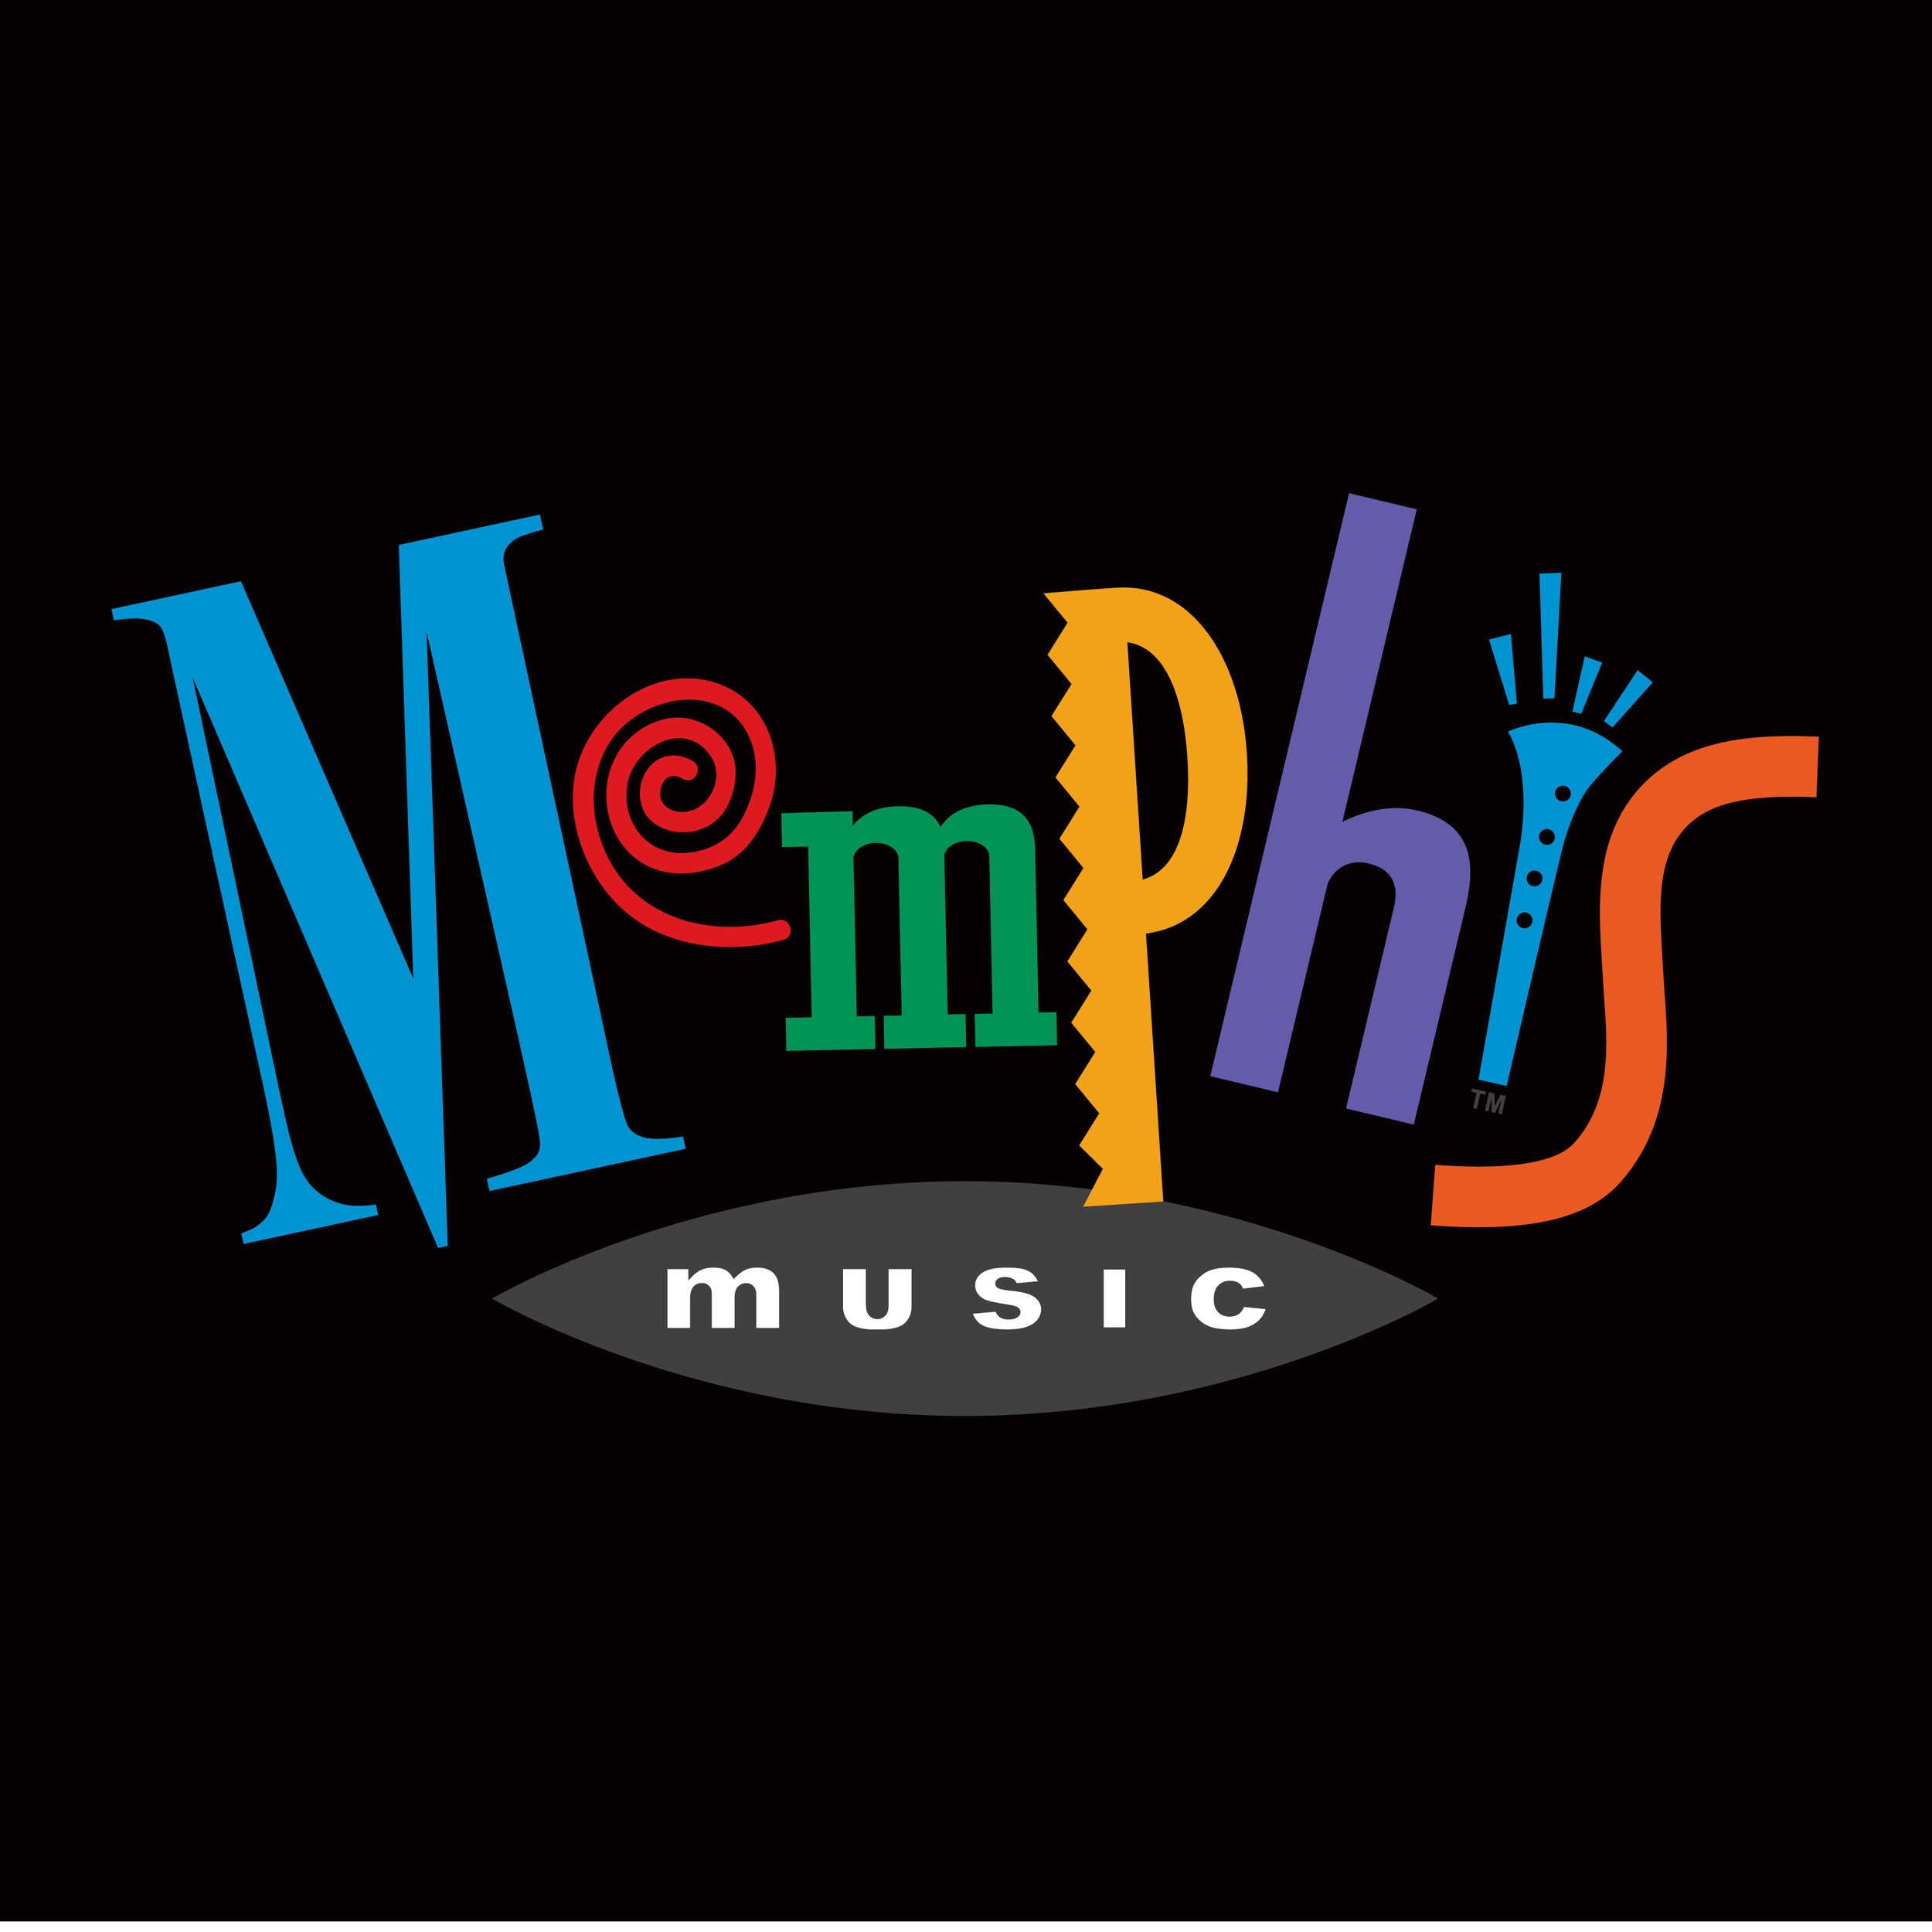  Memphis Music logo  Branding creative and design by Chuck Mitchell  Memphis Music Store  Beale Street Memphis, Tennessee 